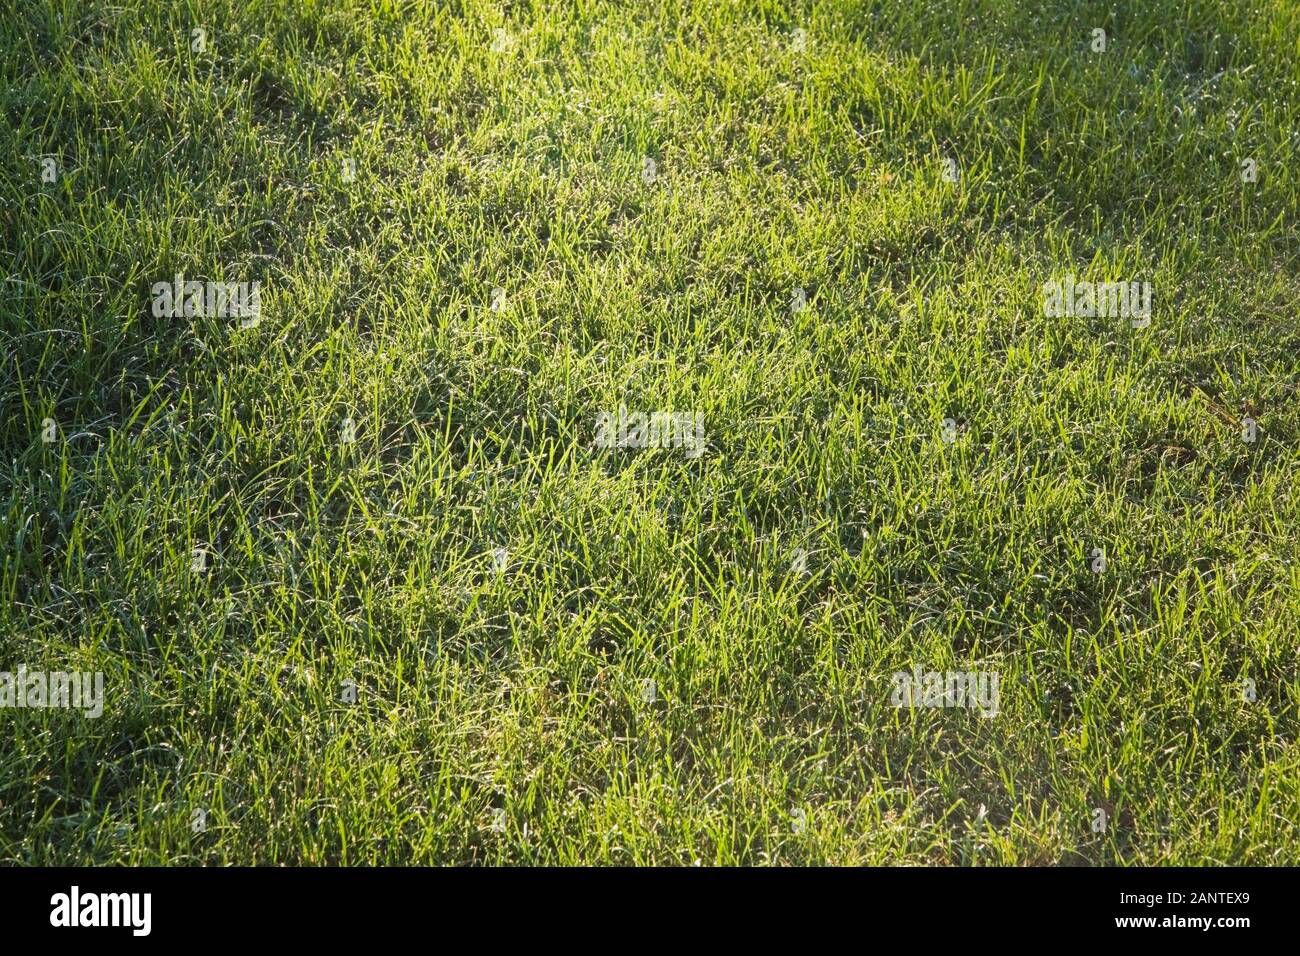 Sunlight shining across a green grass lawn of Festuca arundinacea - Tall Fescue, Poa pratensis - Kentucky bluegrass in early morning in summer Stock Photo